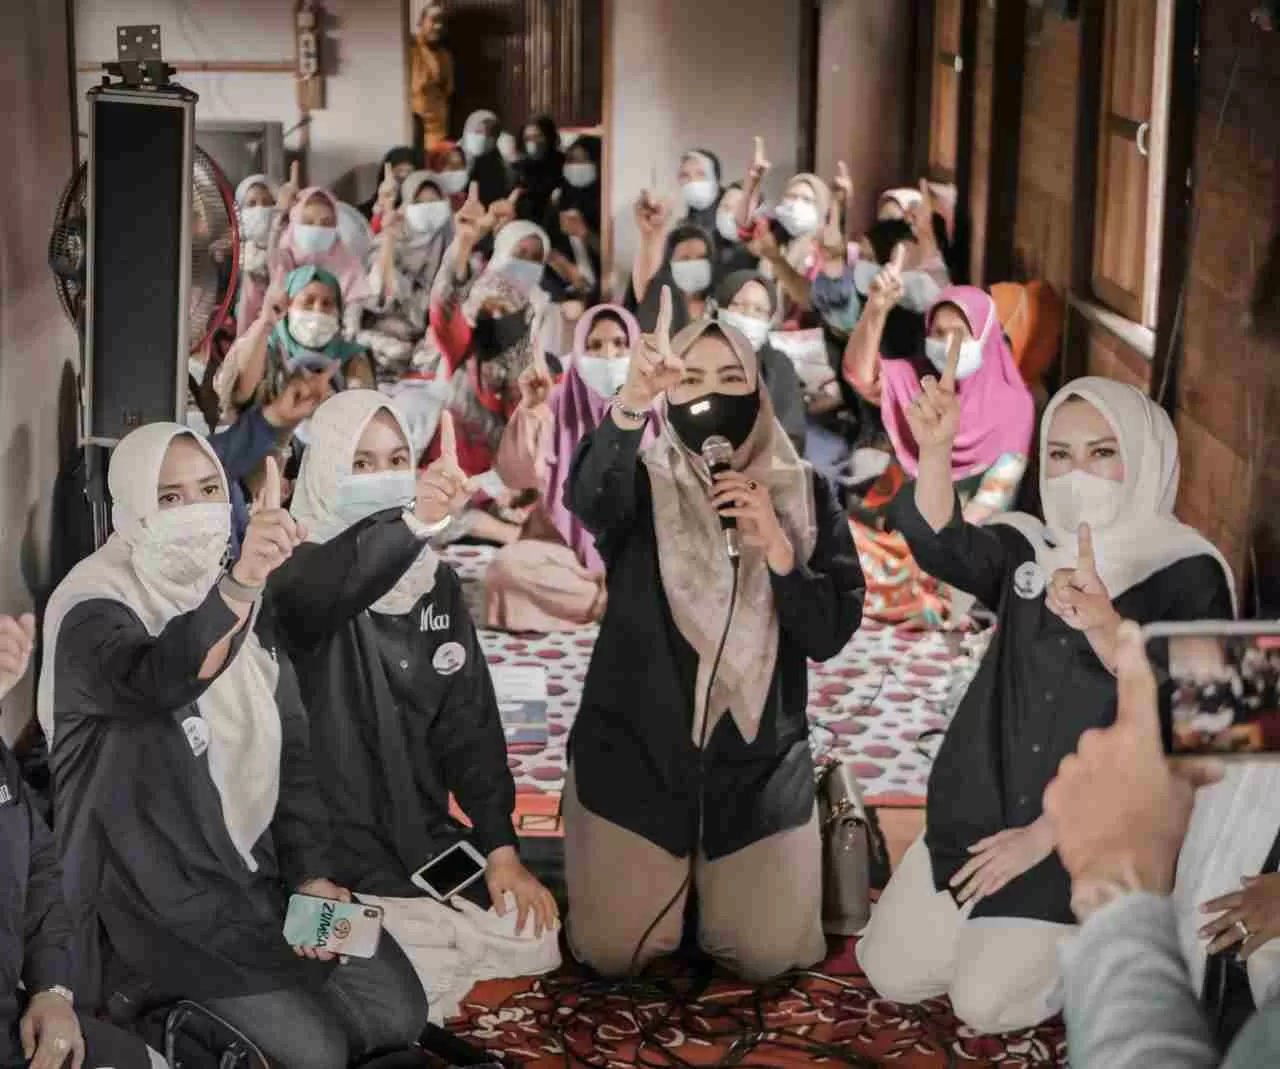 PEERJUANGKAN KAUM PEREMPUAN: Istri calon bupati Banjar, Hj Nur Gita Tiyas berjanji akan membantu menyejahterakan kaum perempuan, jika pasangan nomor 01 H Saidi Mansyur - Habib Idrus Al-Habsyie terpilih.